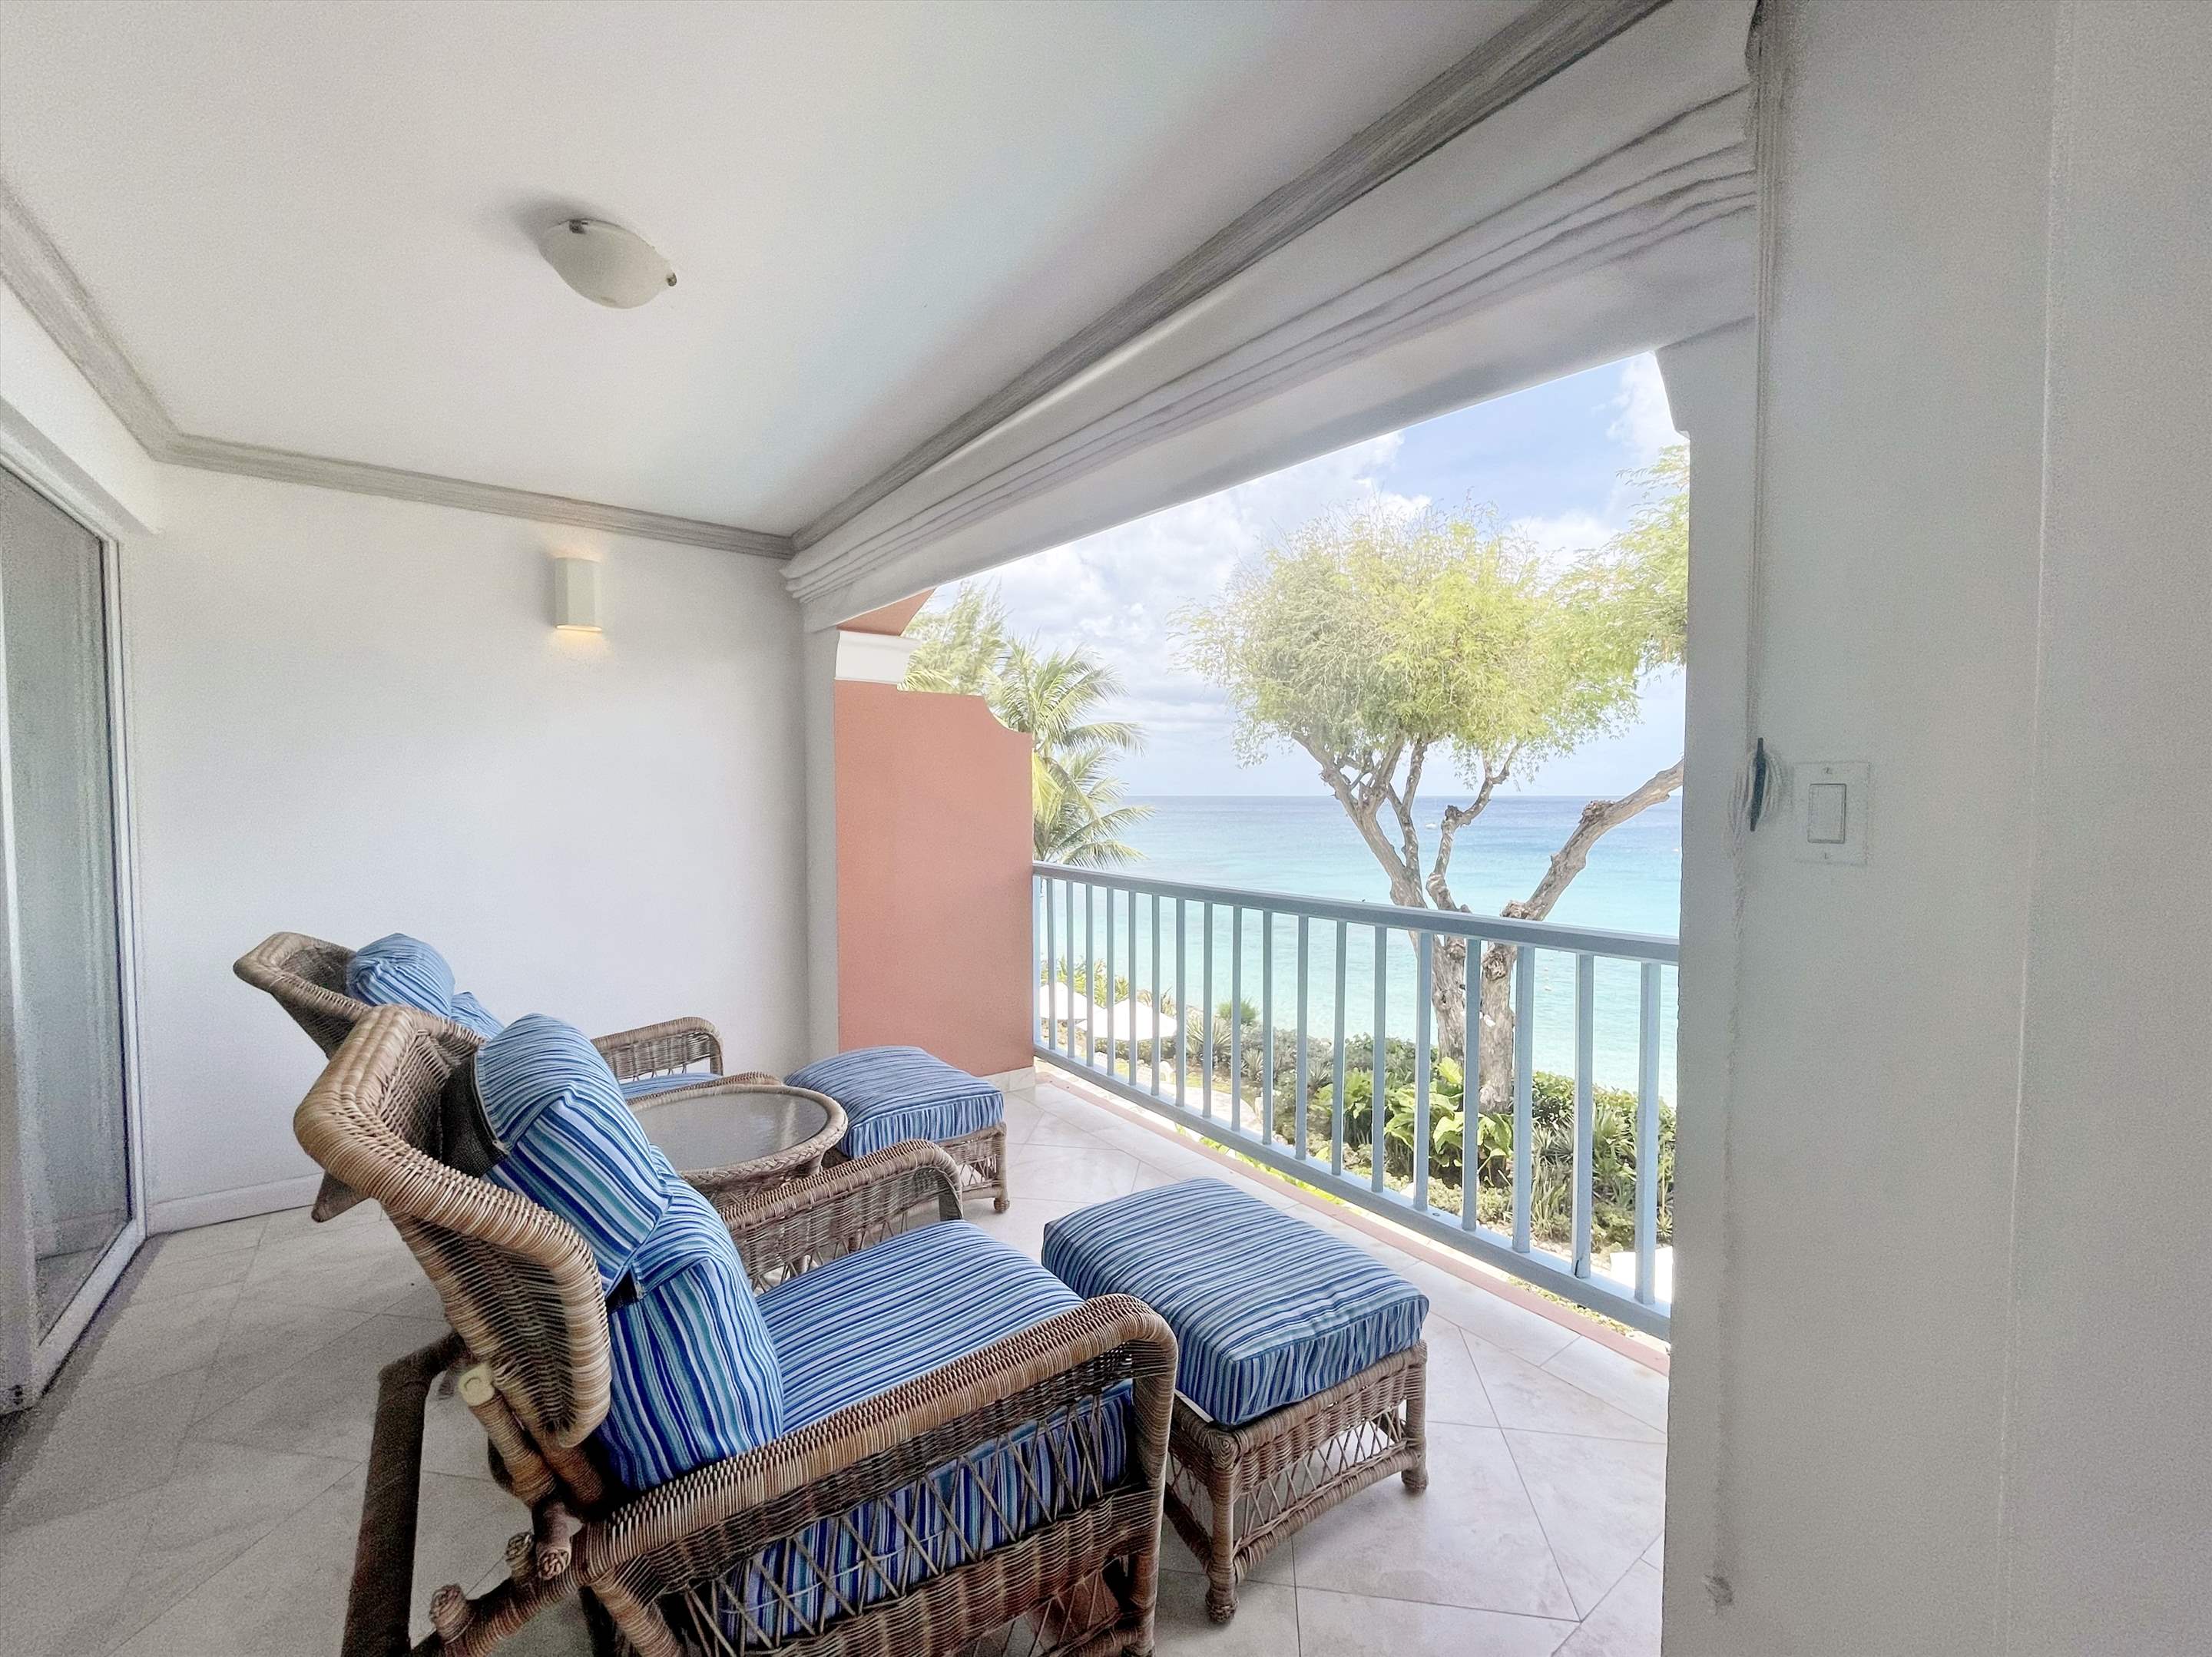 Villas on the Beach 303, 1 bedroom, 1 bedroom apartment in St. James & West Coast, Barbados Photo #5